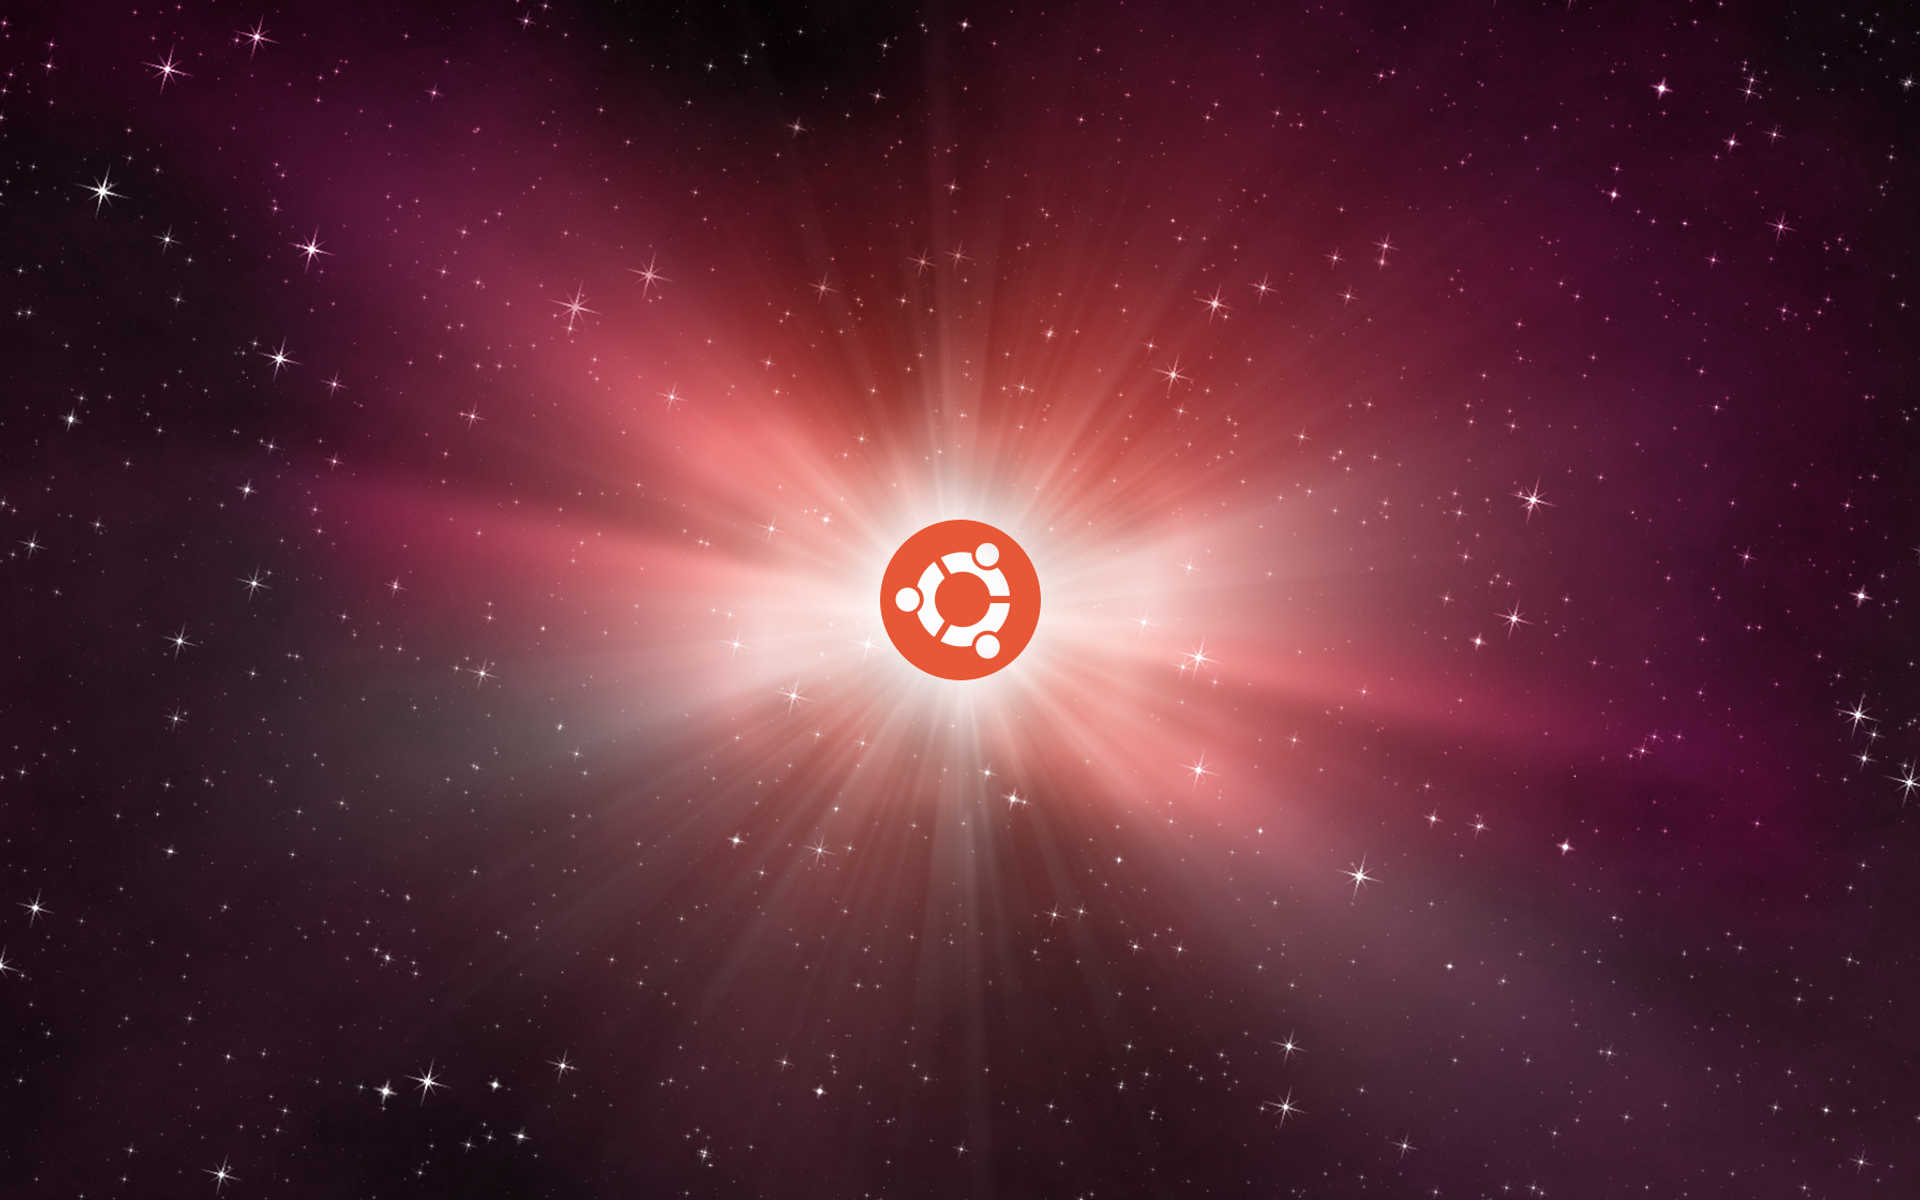 ubuntu wallpaper,astronomisches objekt,himmel,atmosphäre,platz,universum